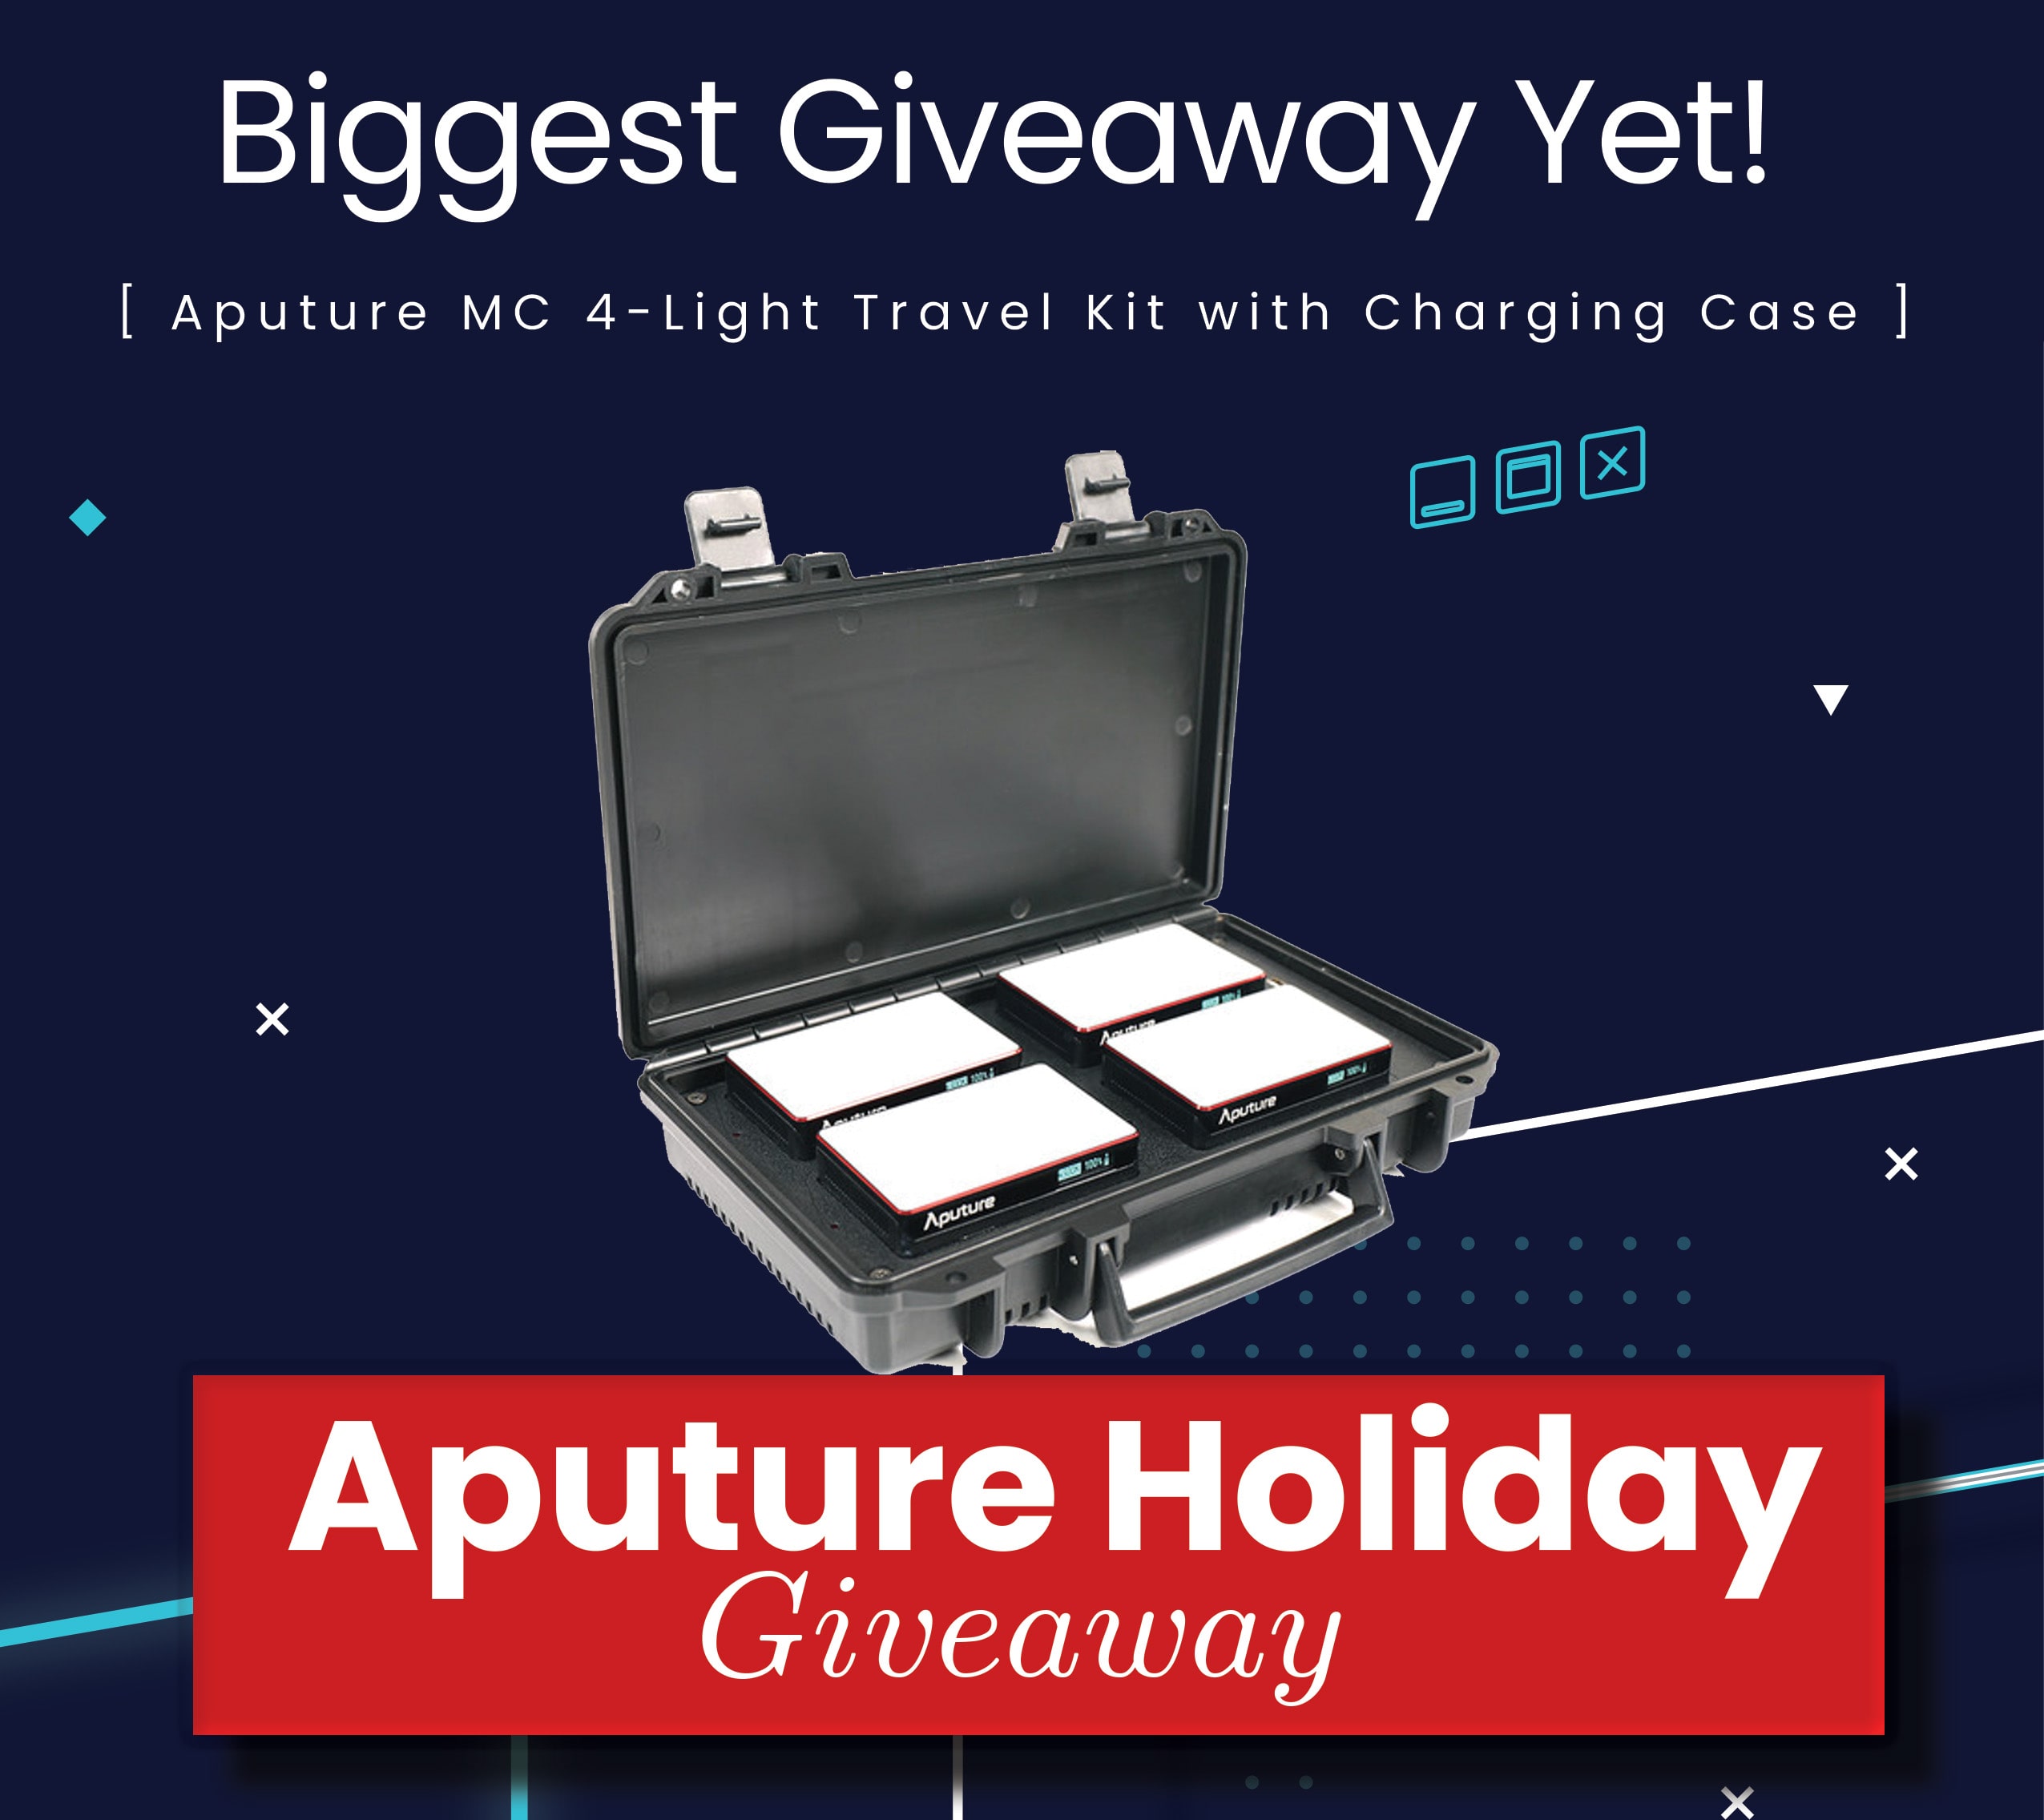 Aputure Holiday MC 4-Light Travel Kit Giveaway